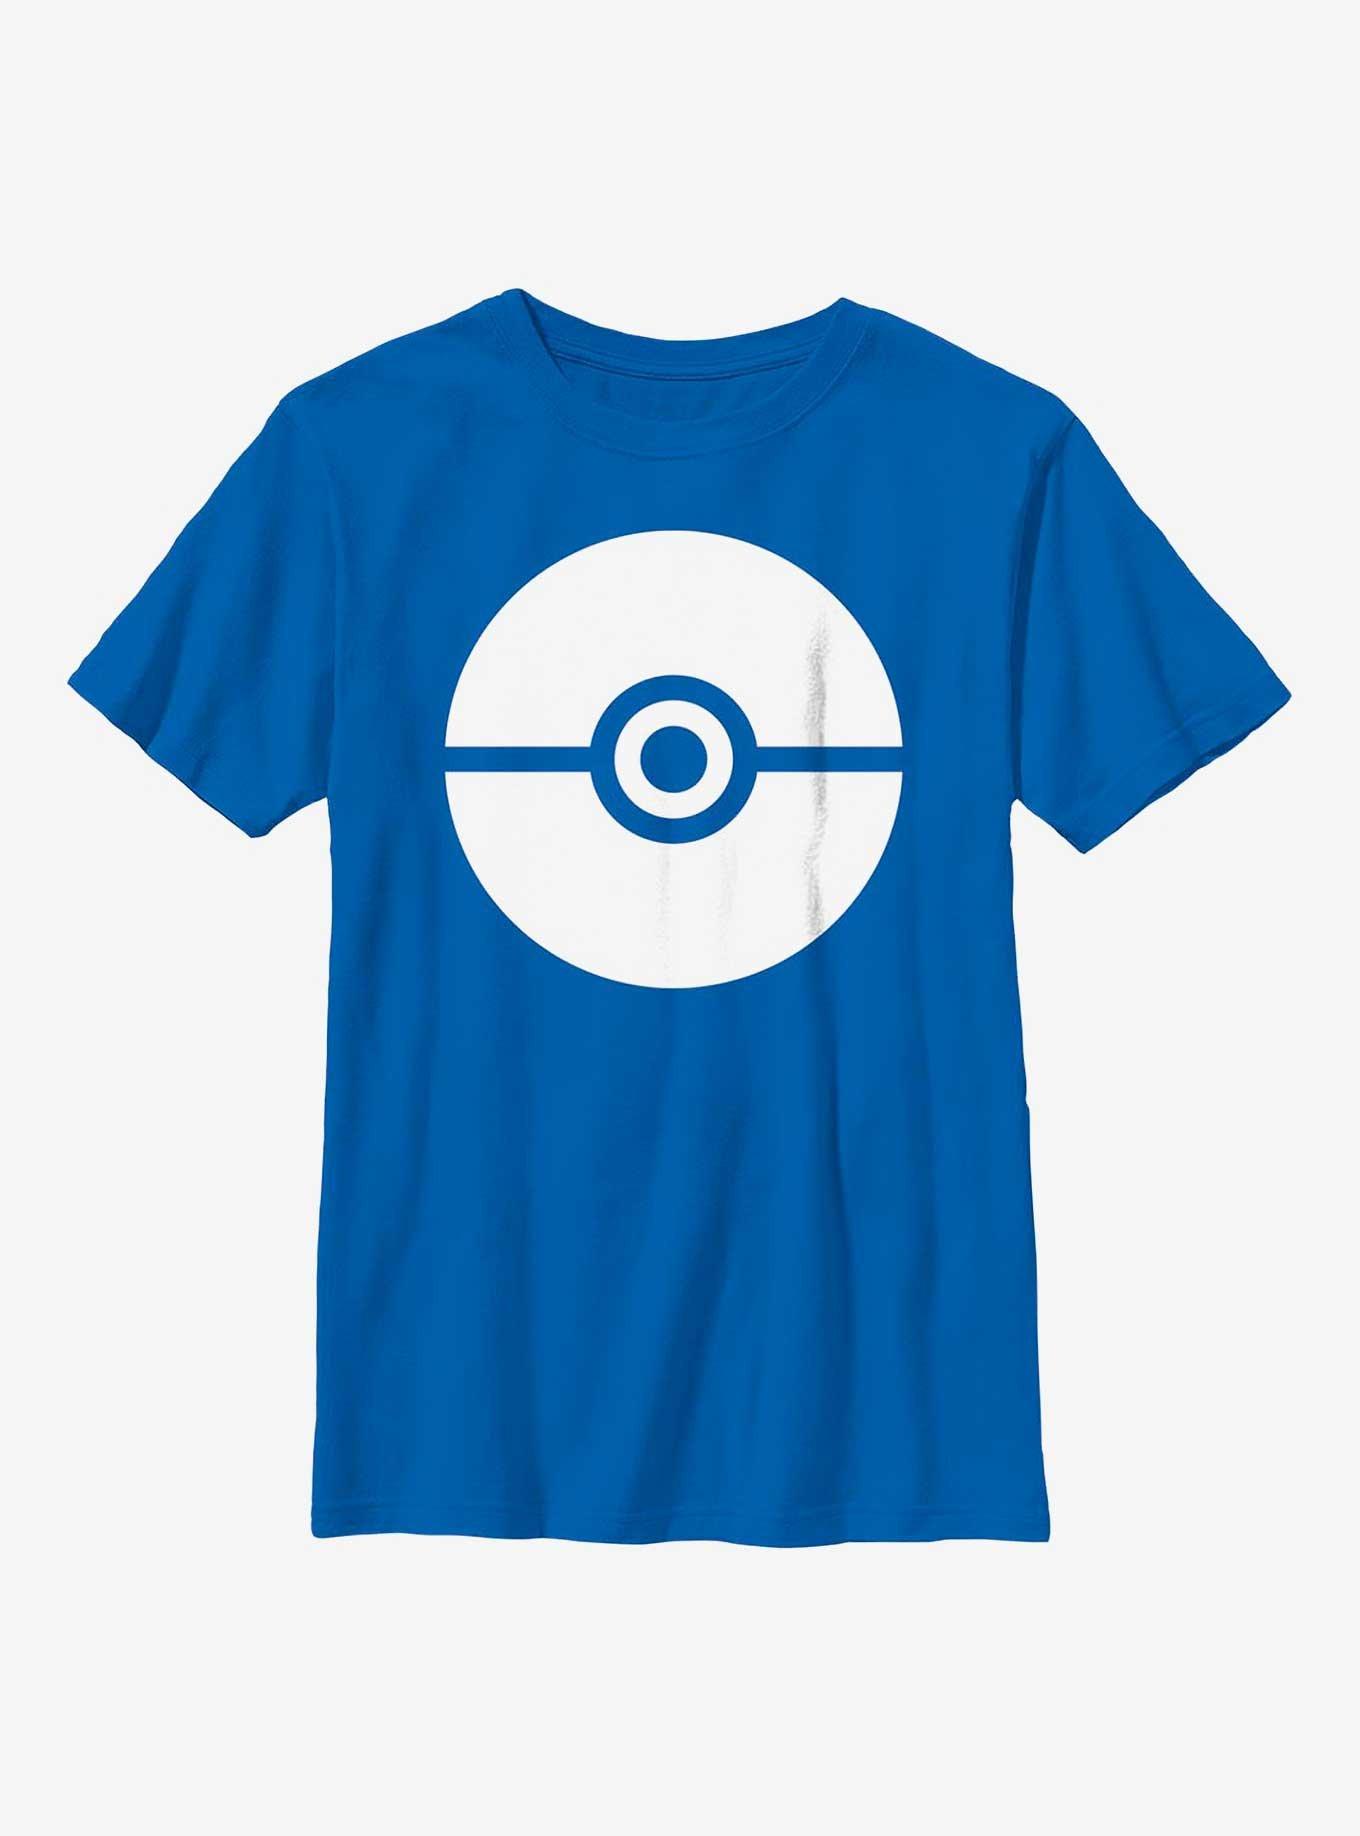 Pokemon Pokeball Simple Youth T-Shirt, , hi-res